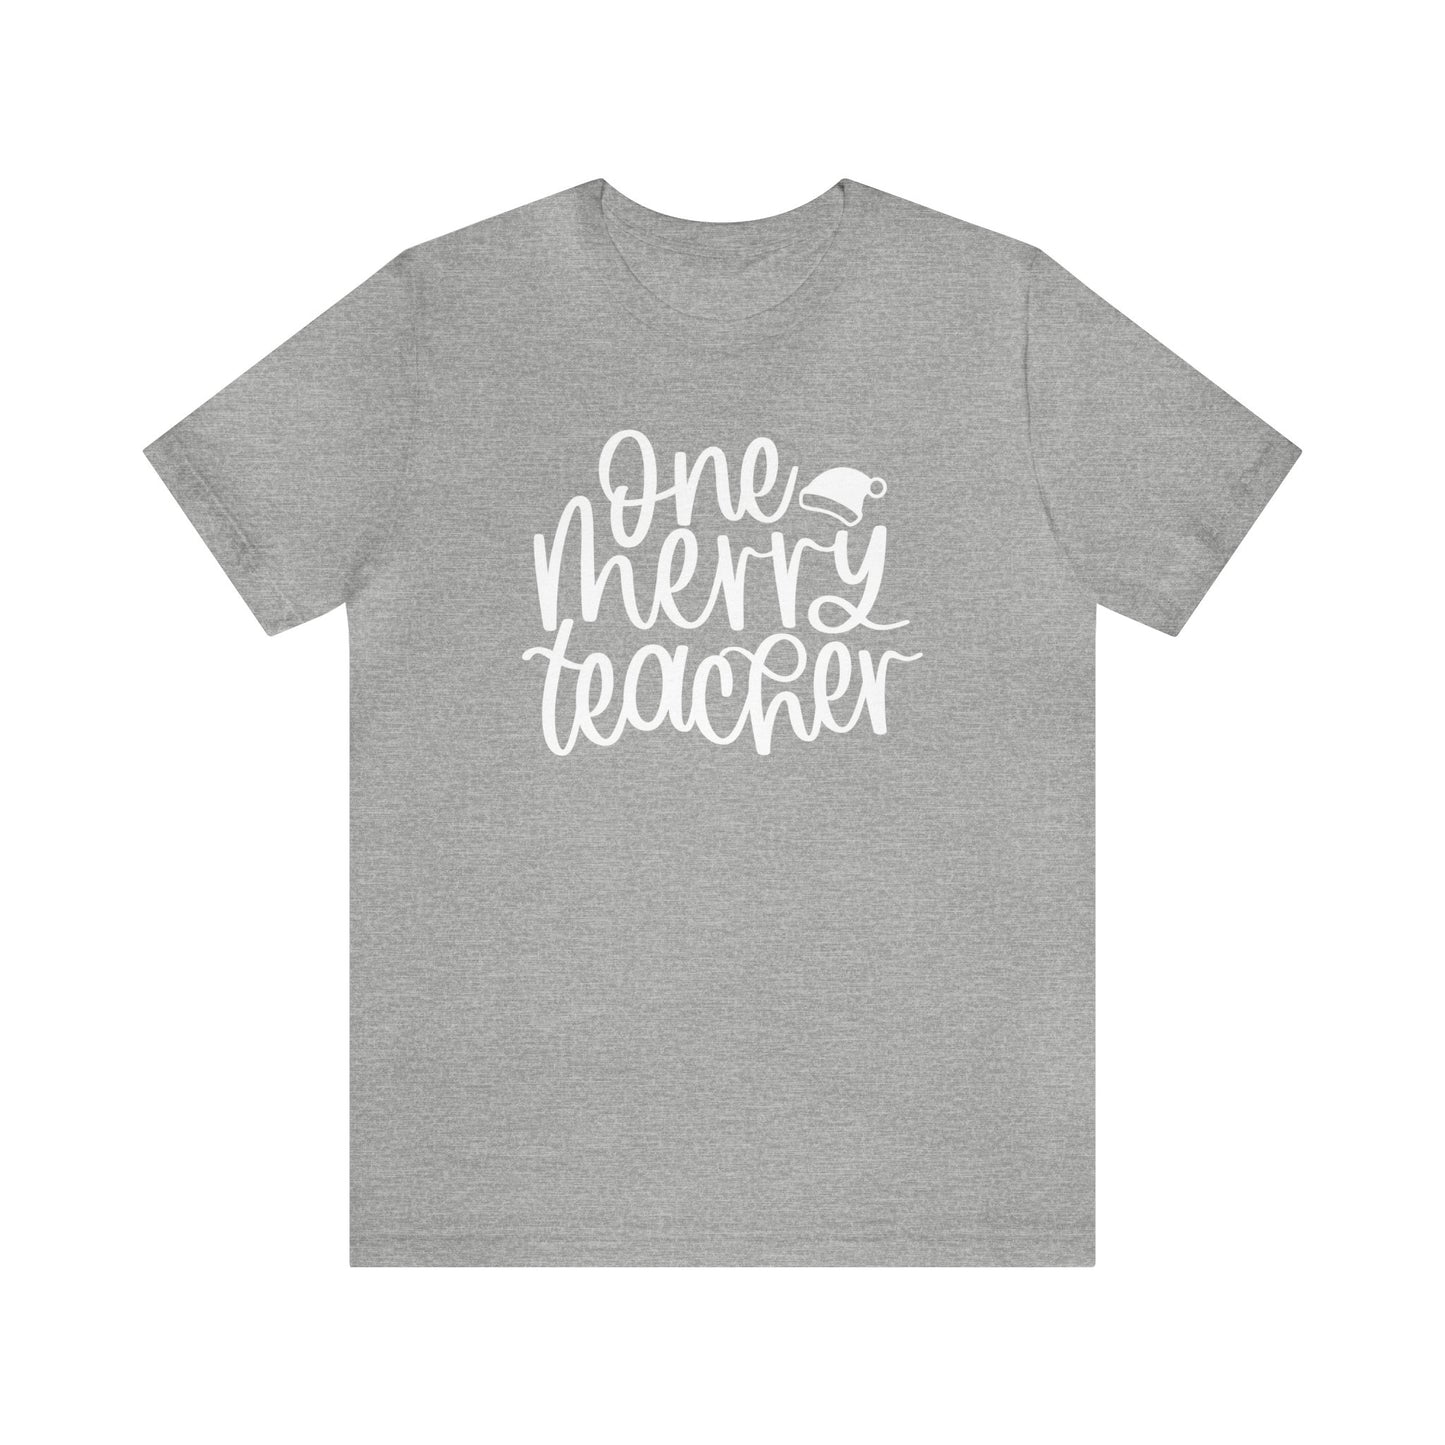 One Merry Teacher Christmas Shirt Short Sleeve Tee